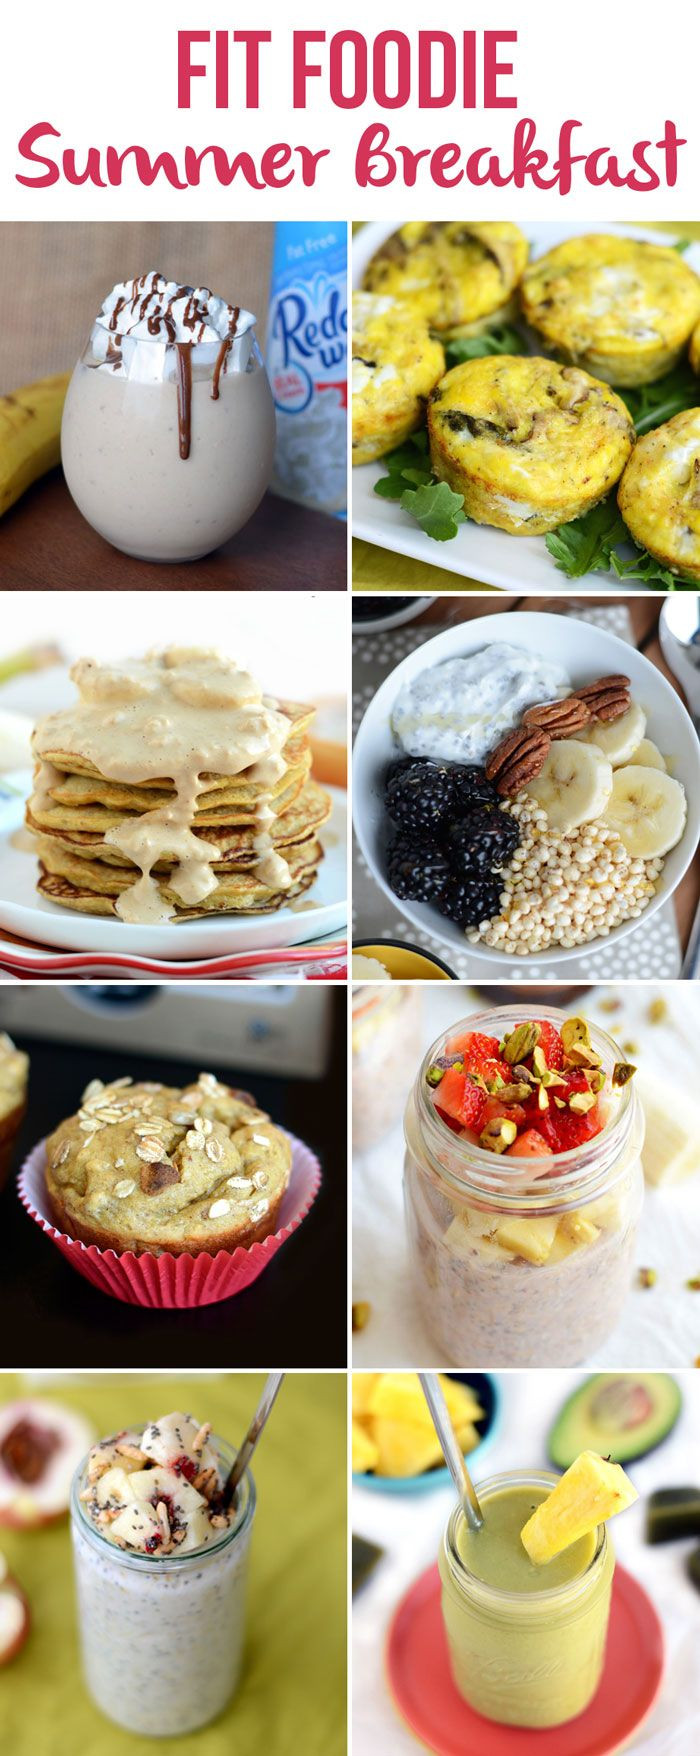 Healthy Breakfast Pinterest Best 20 17 Best Images About Breakfast Recipes On Pinterest